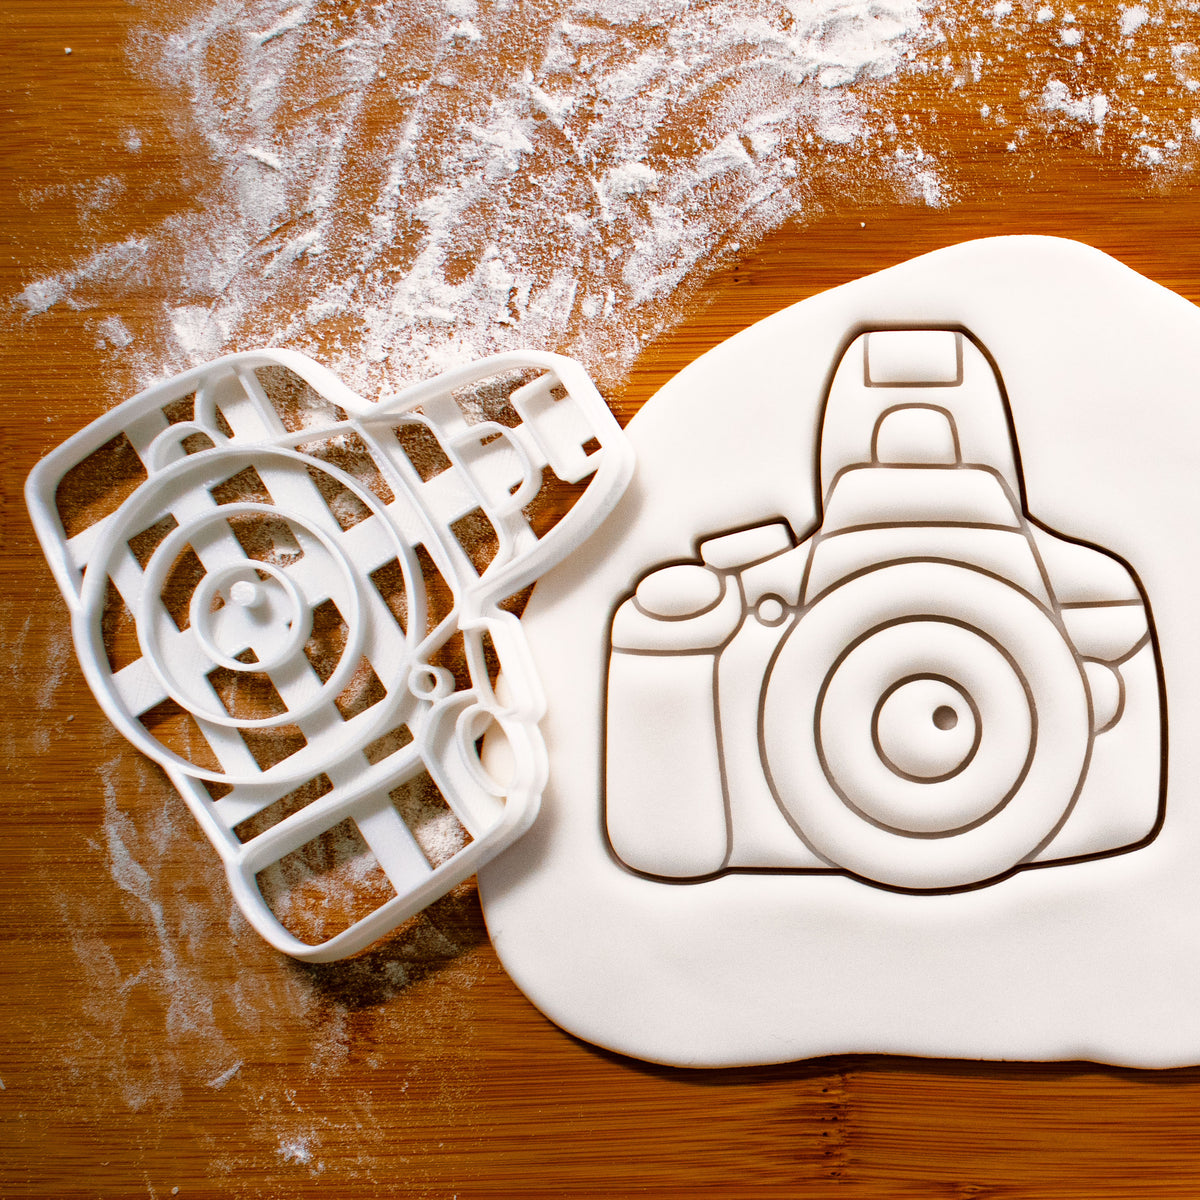 DSLR camera cookie cutter pressed on fondant